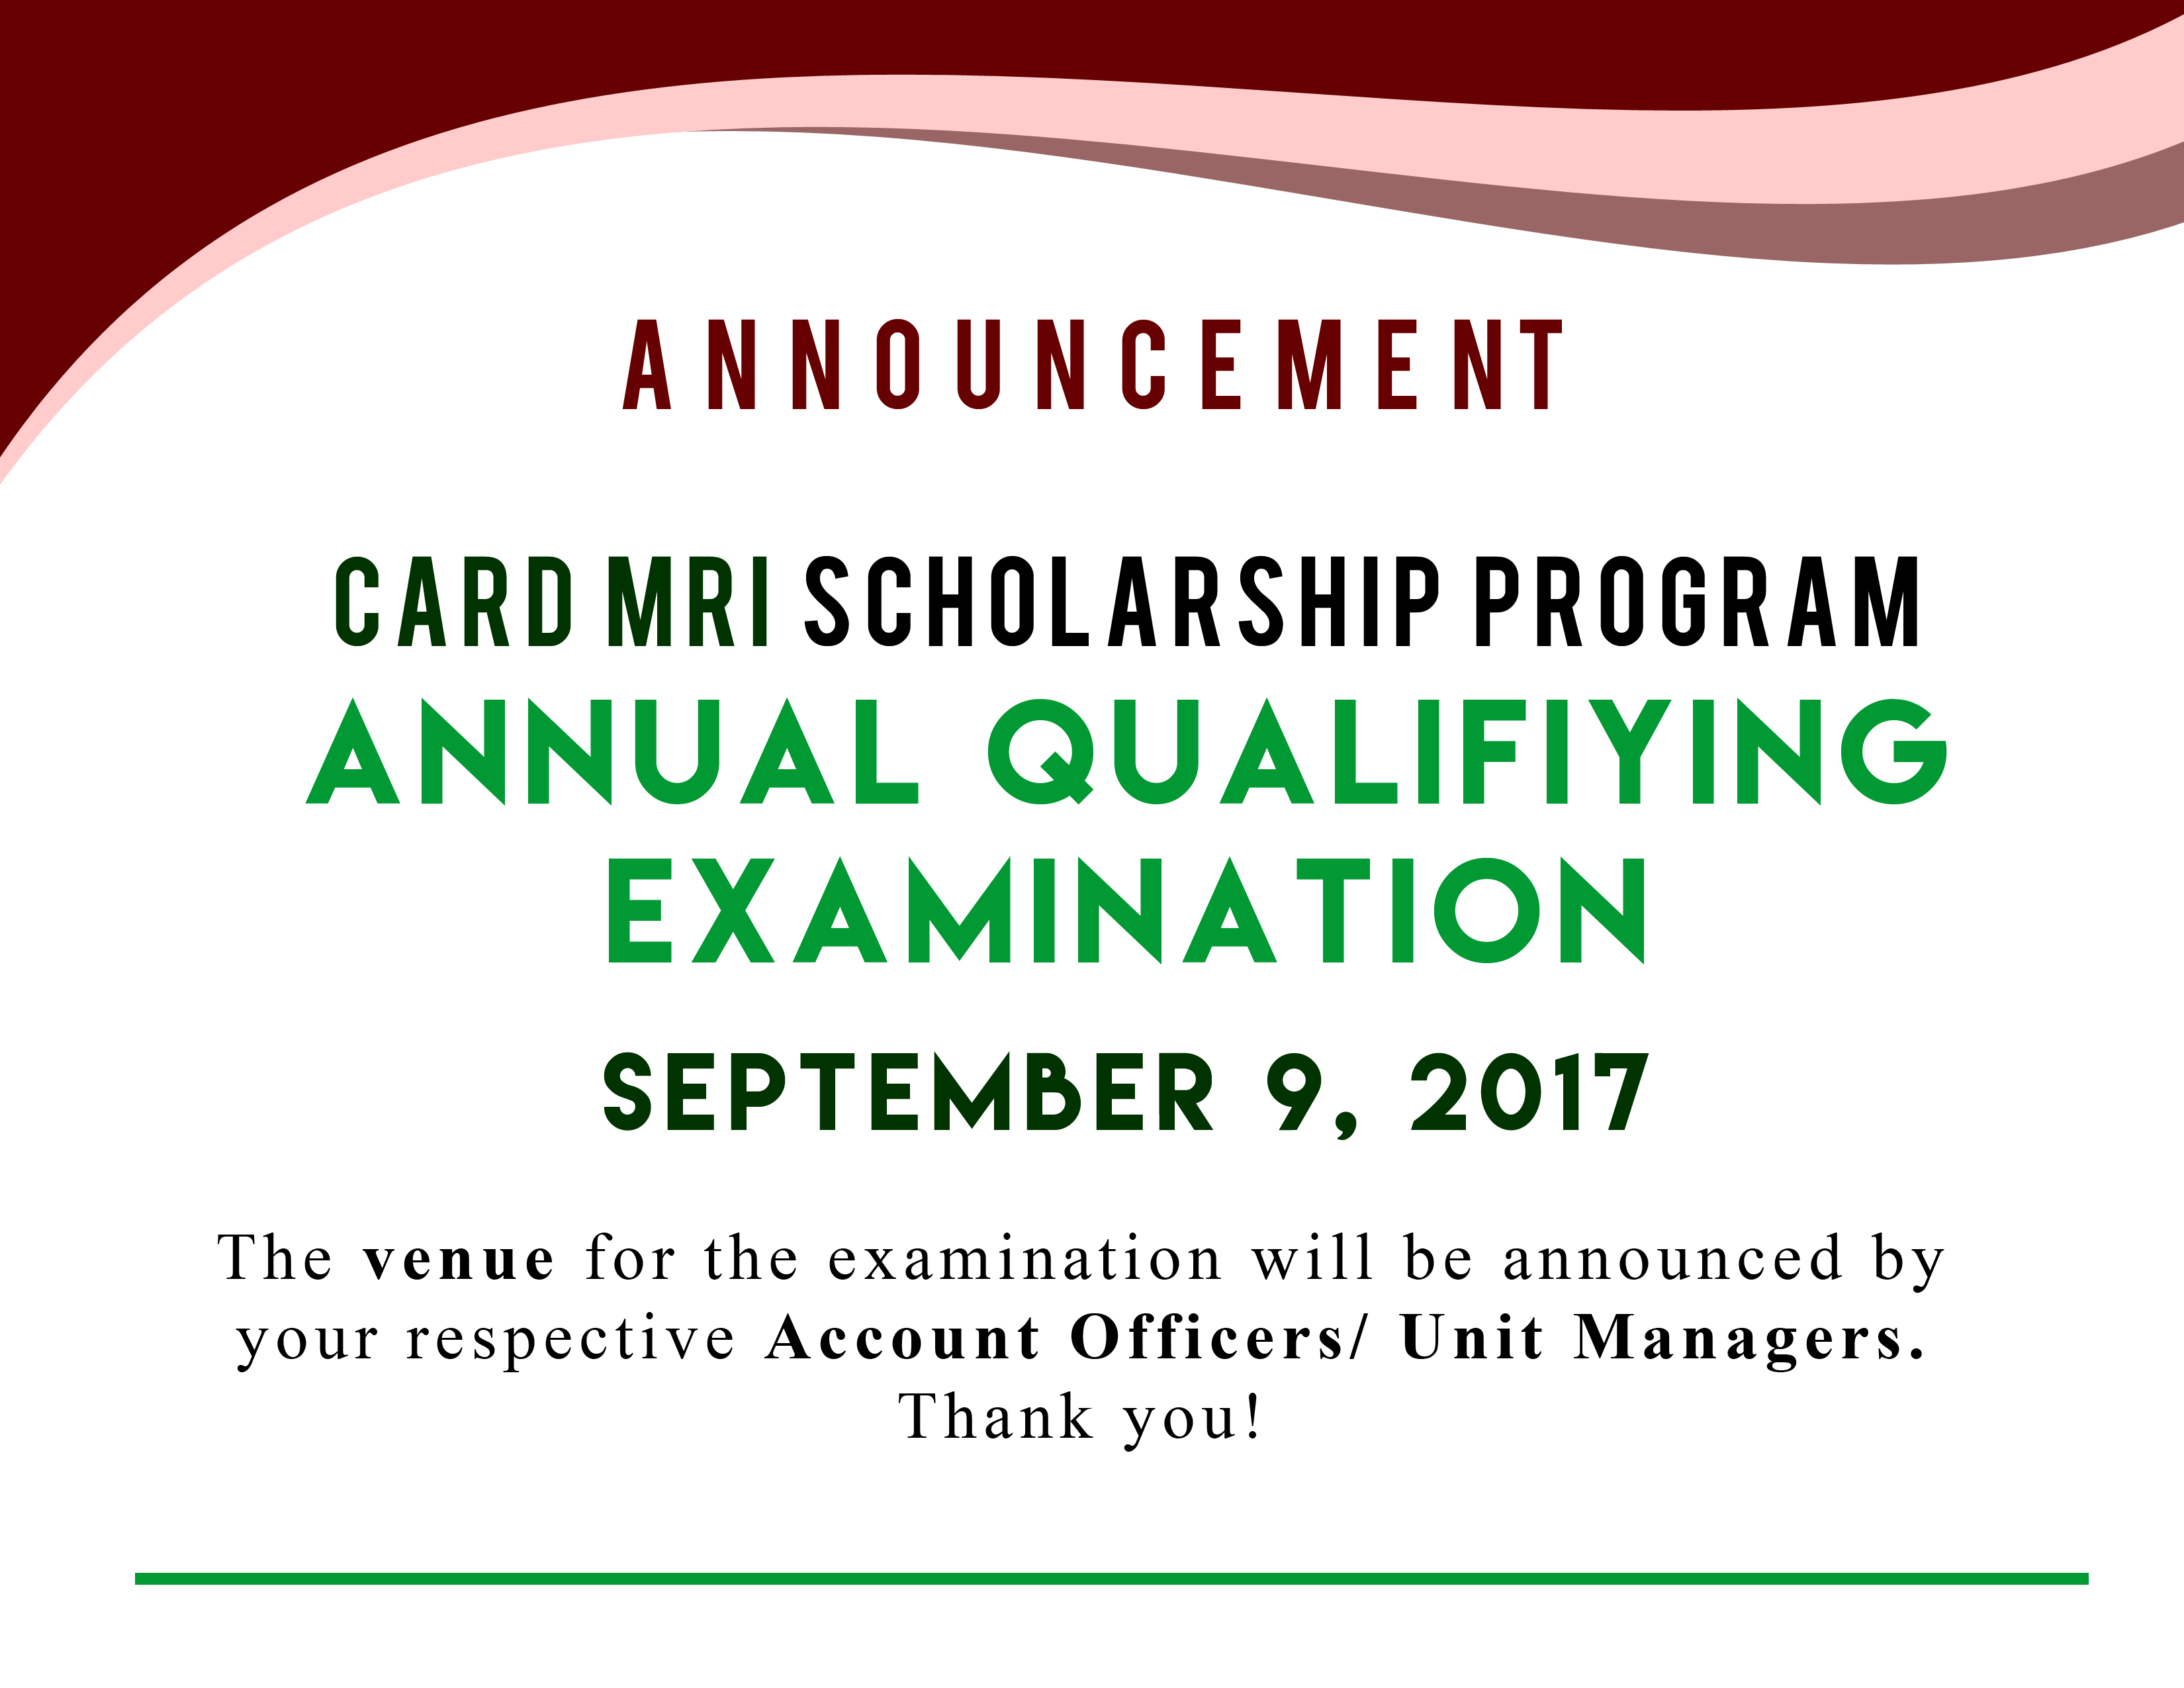 CSP Annual Qualifying Examination on September 9, 2017